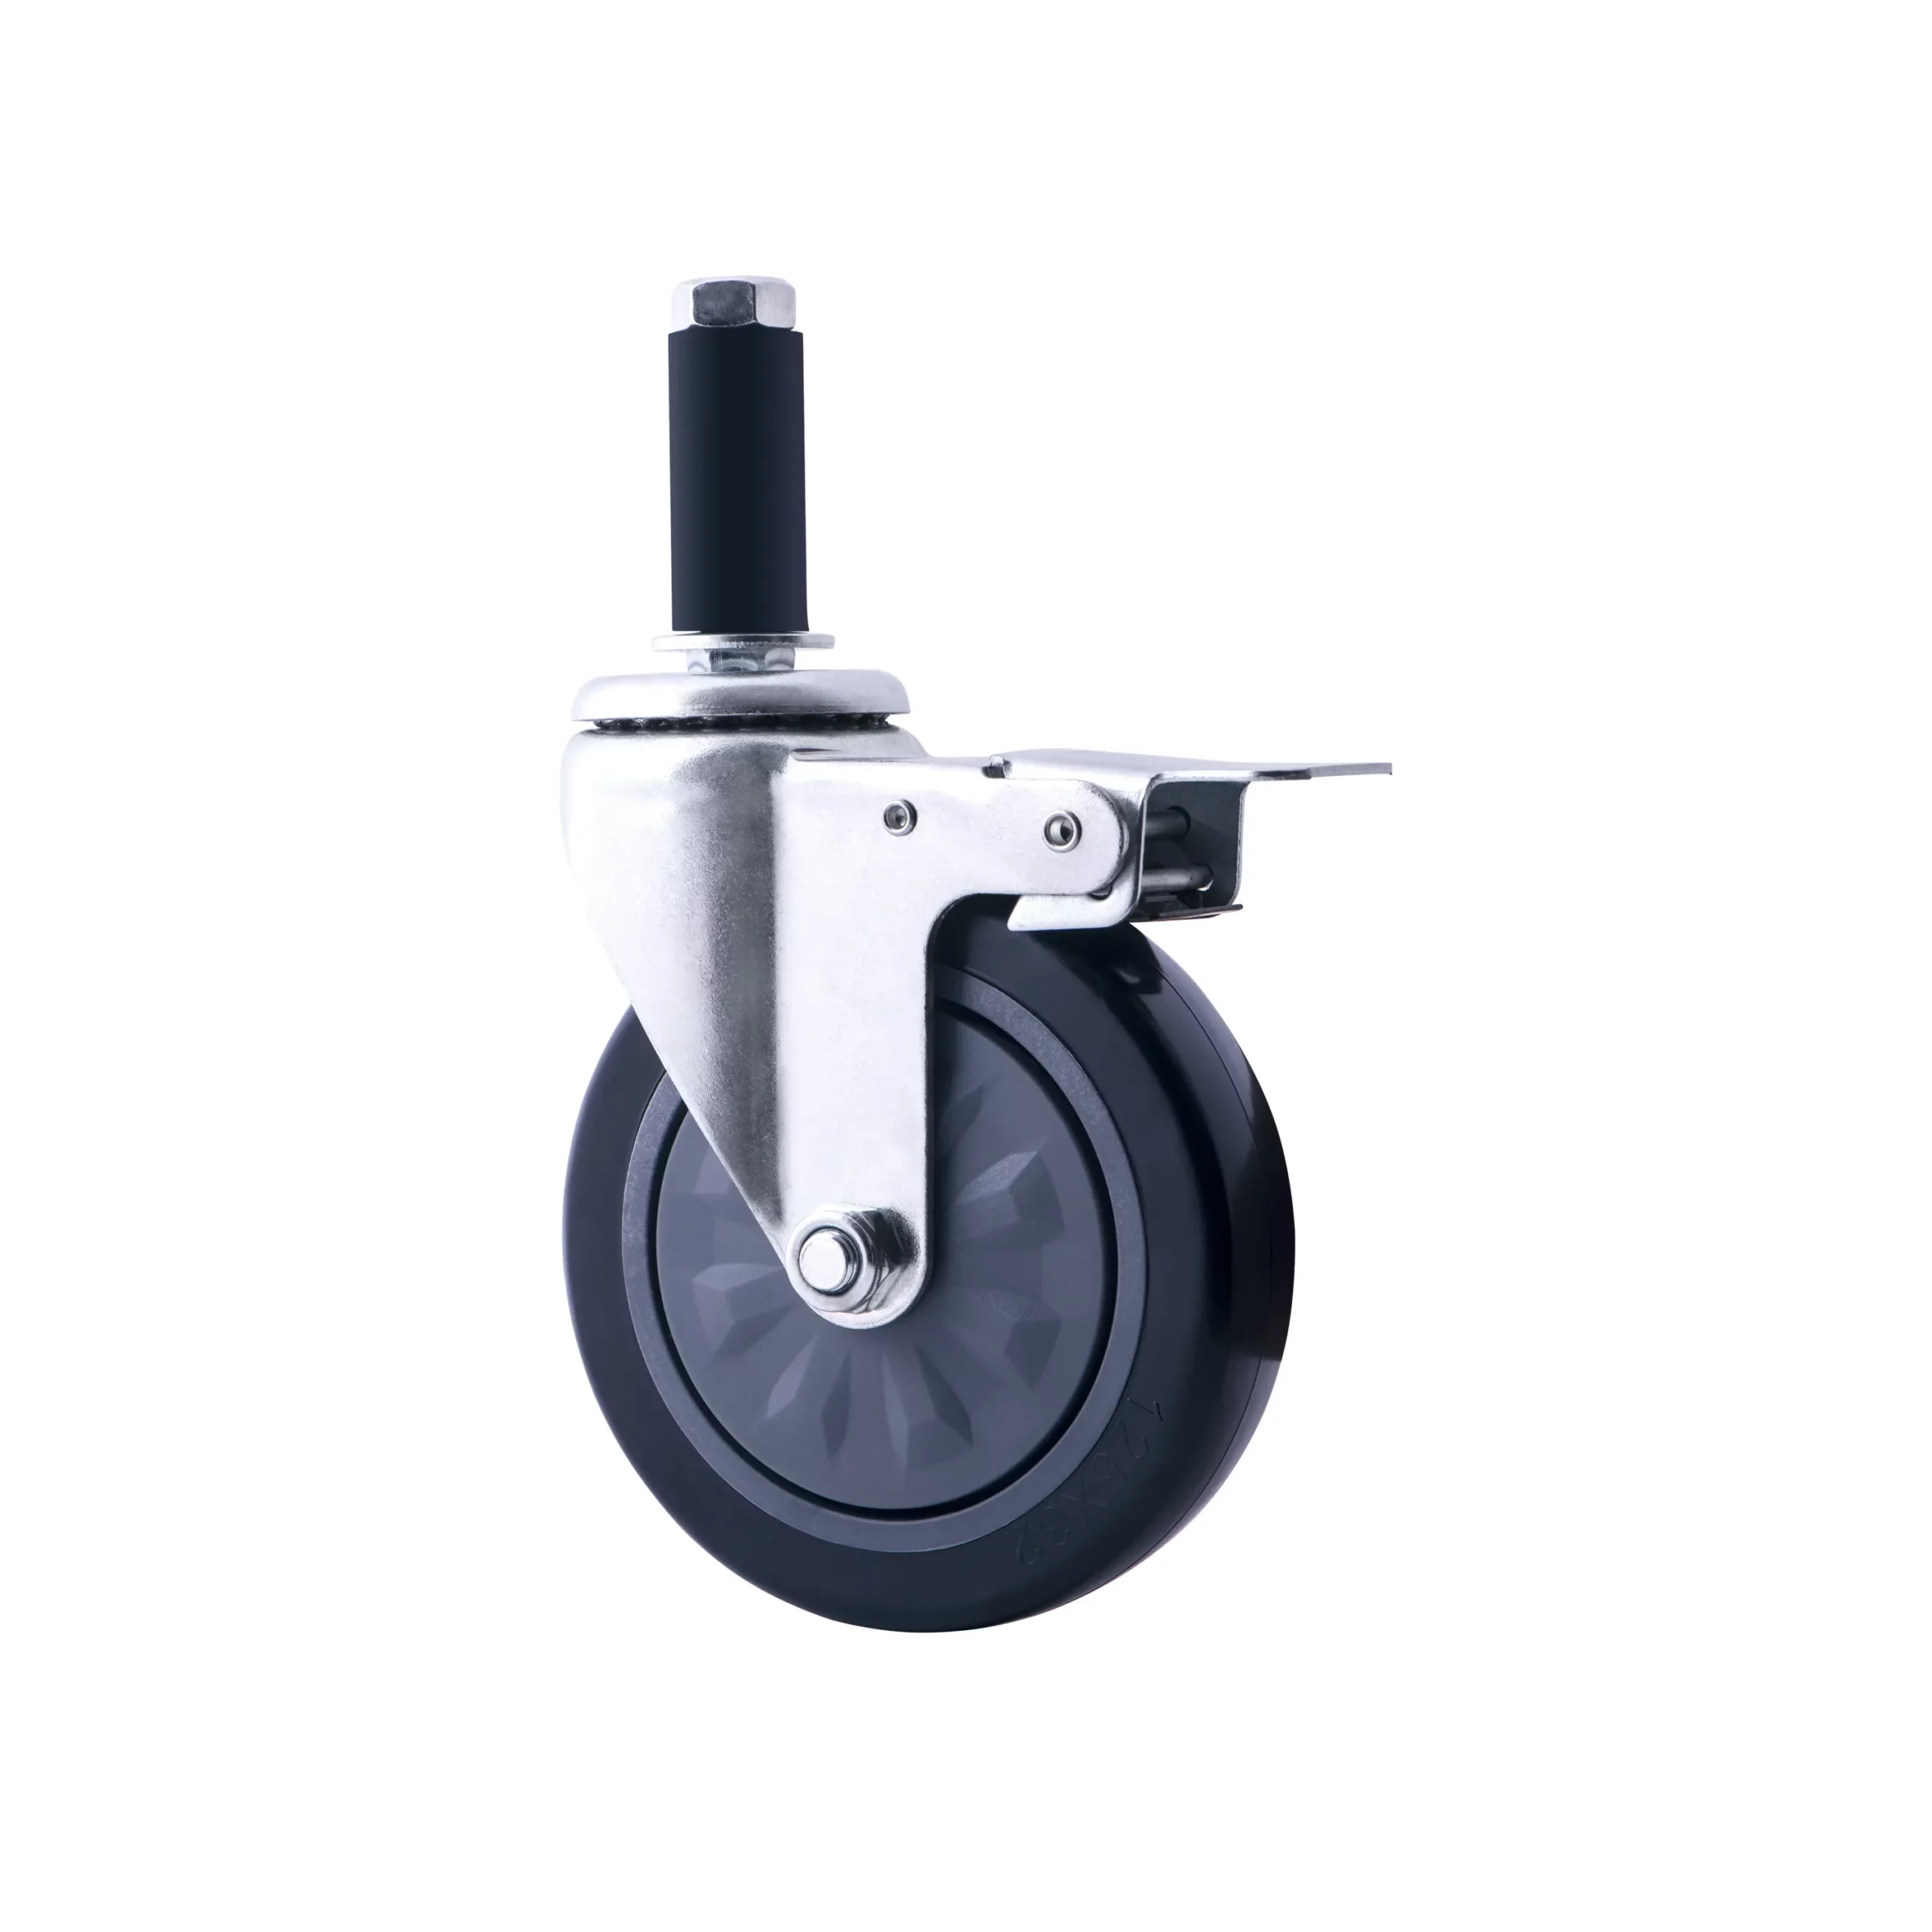 Bullcaster expansion rod caster wheel